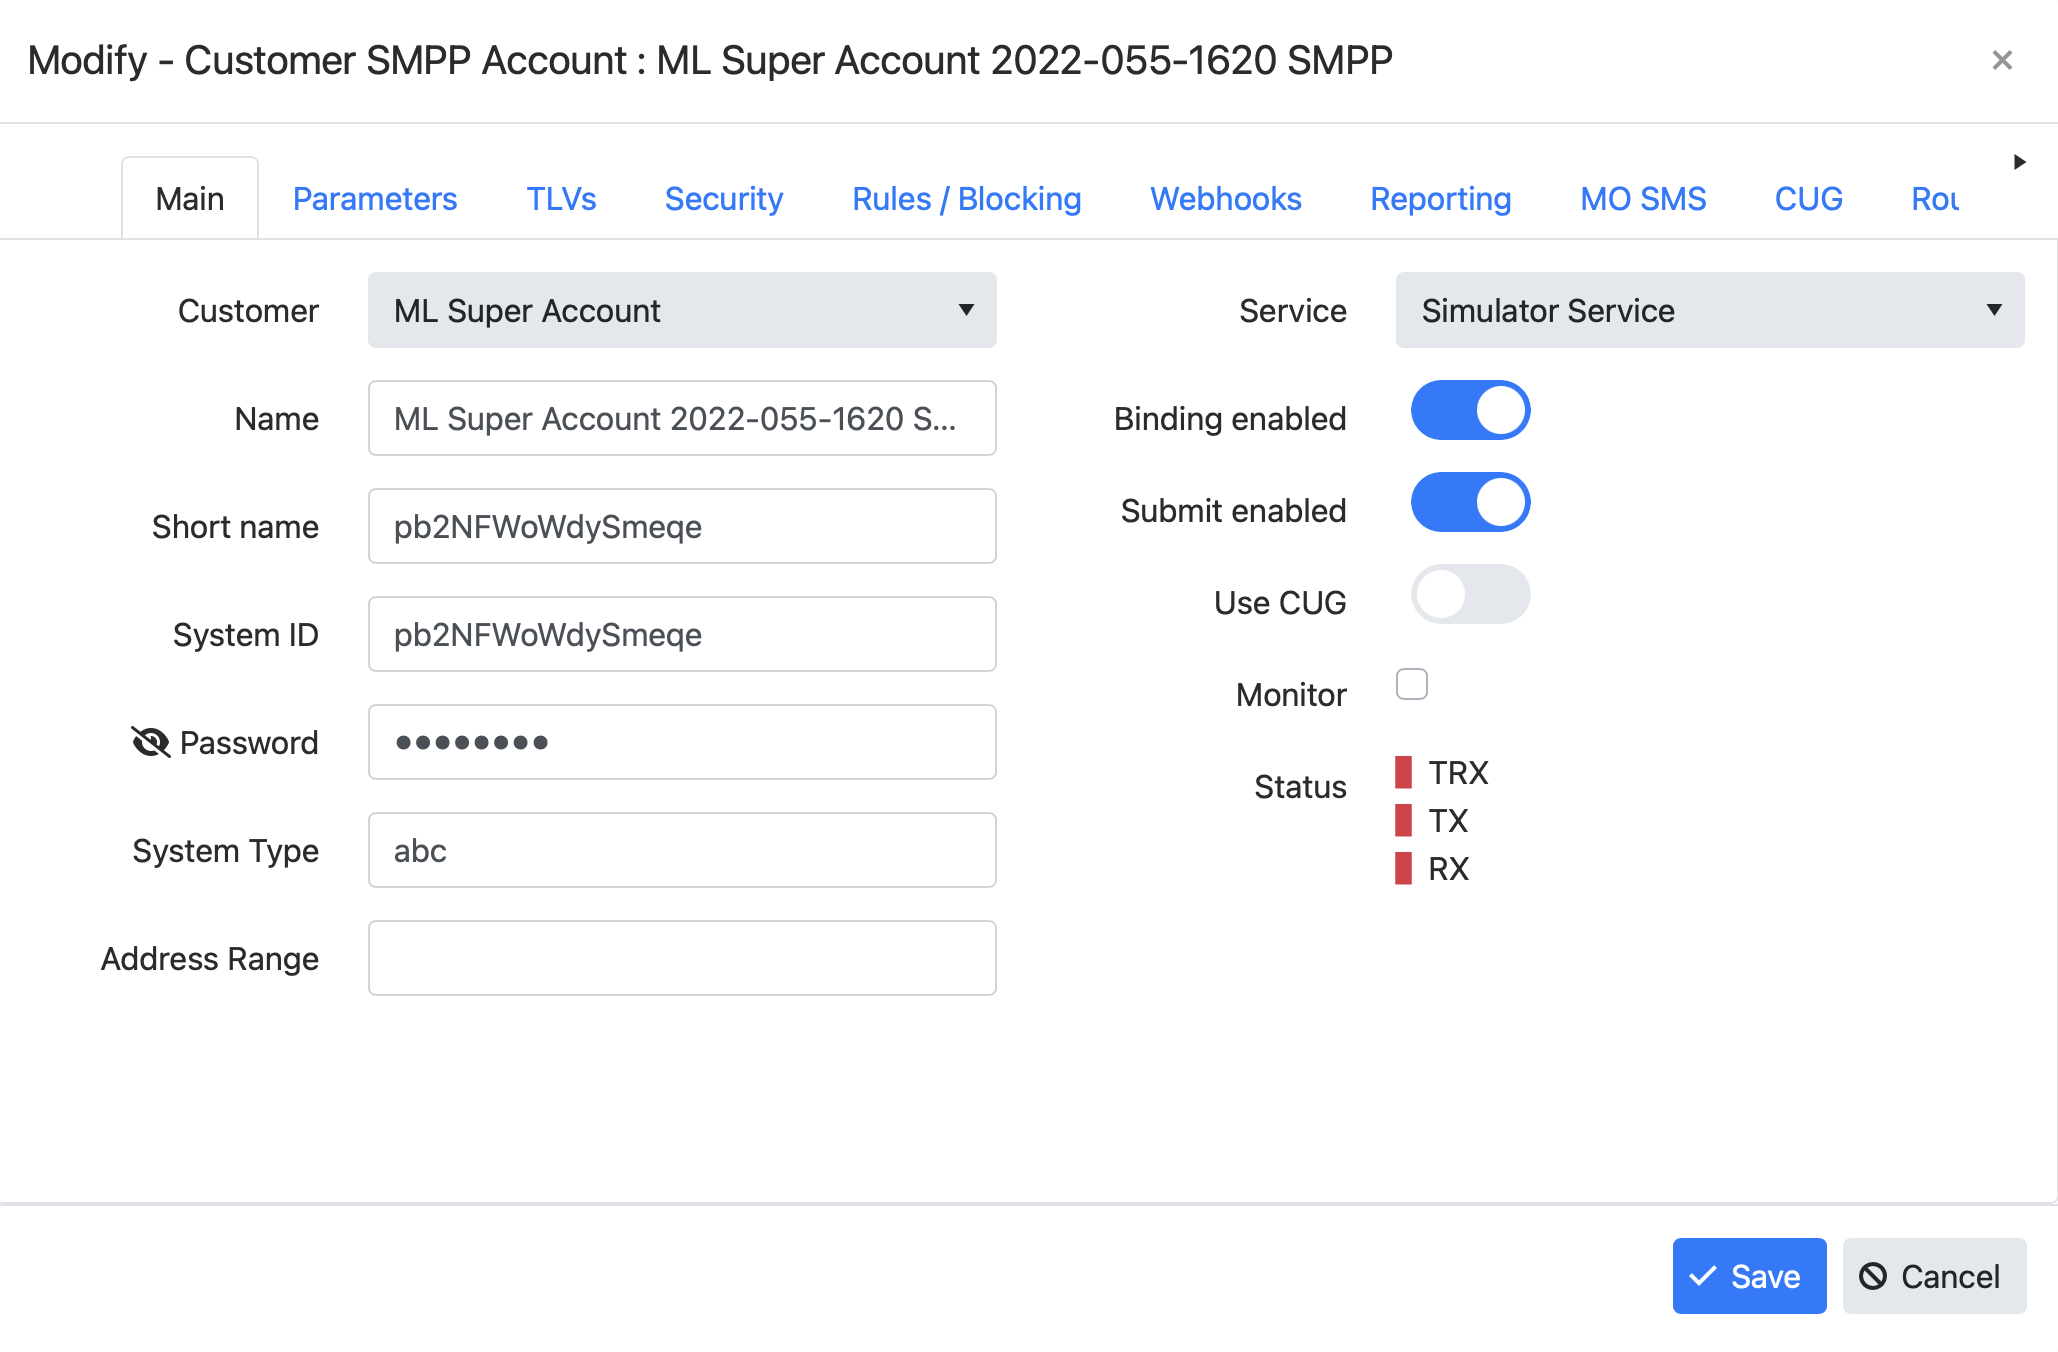 Customer SMPP account configuration dialog (edit existing SMPP account)